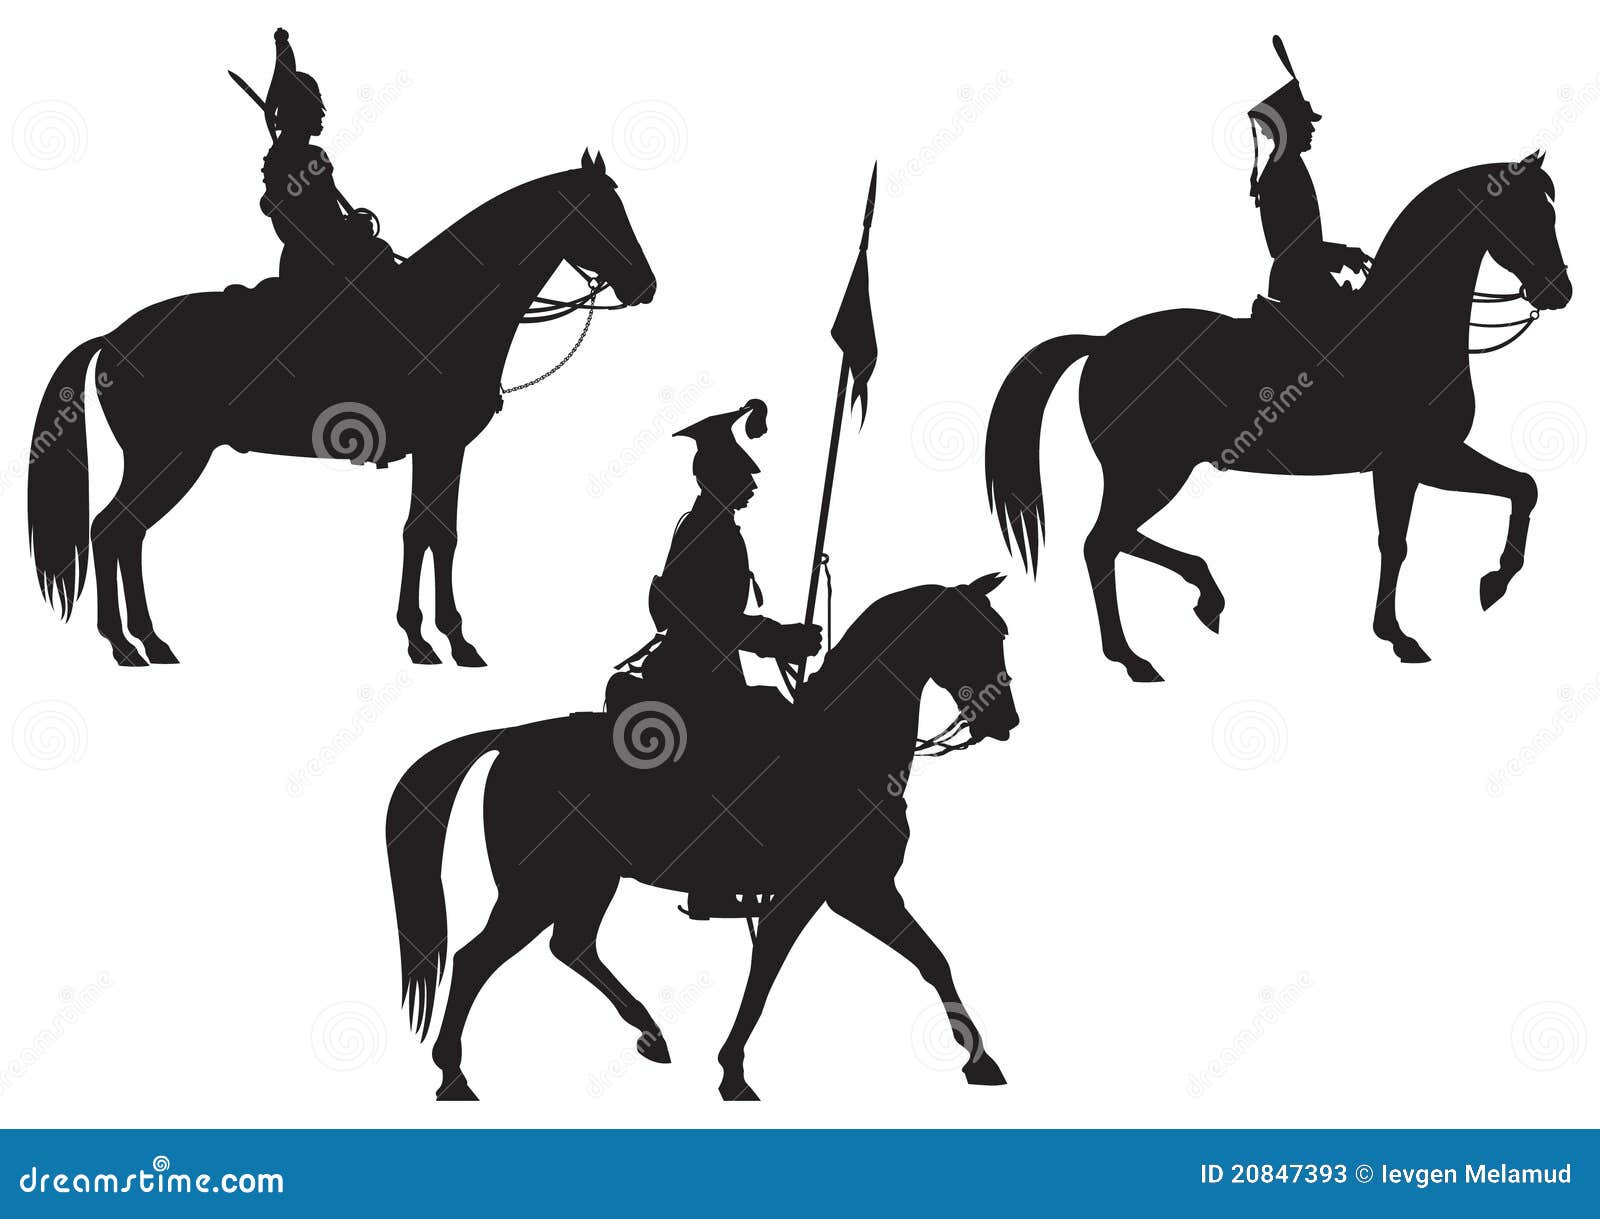 cavalry horse riders